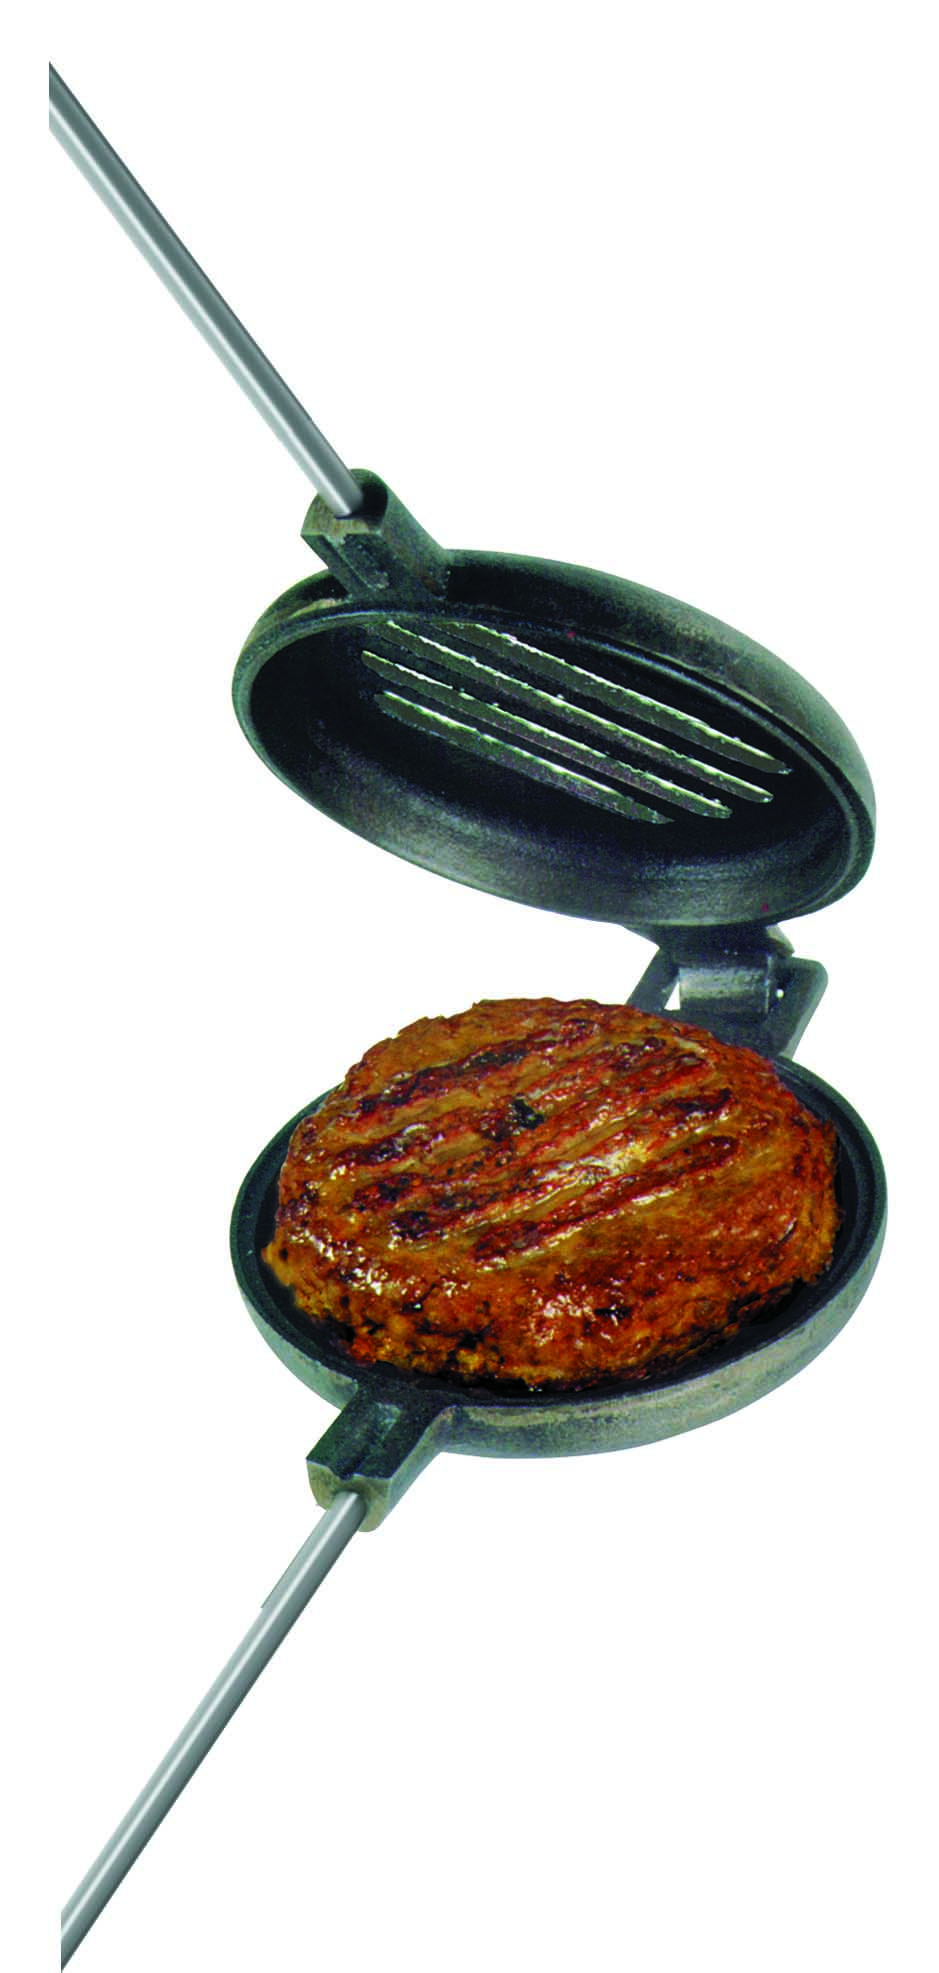 https://www.leacockcolemancenter.com/Mountain-Pie-Maker-Cast-Iron---Hamburger-Grill/image/item/1505